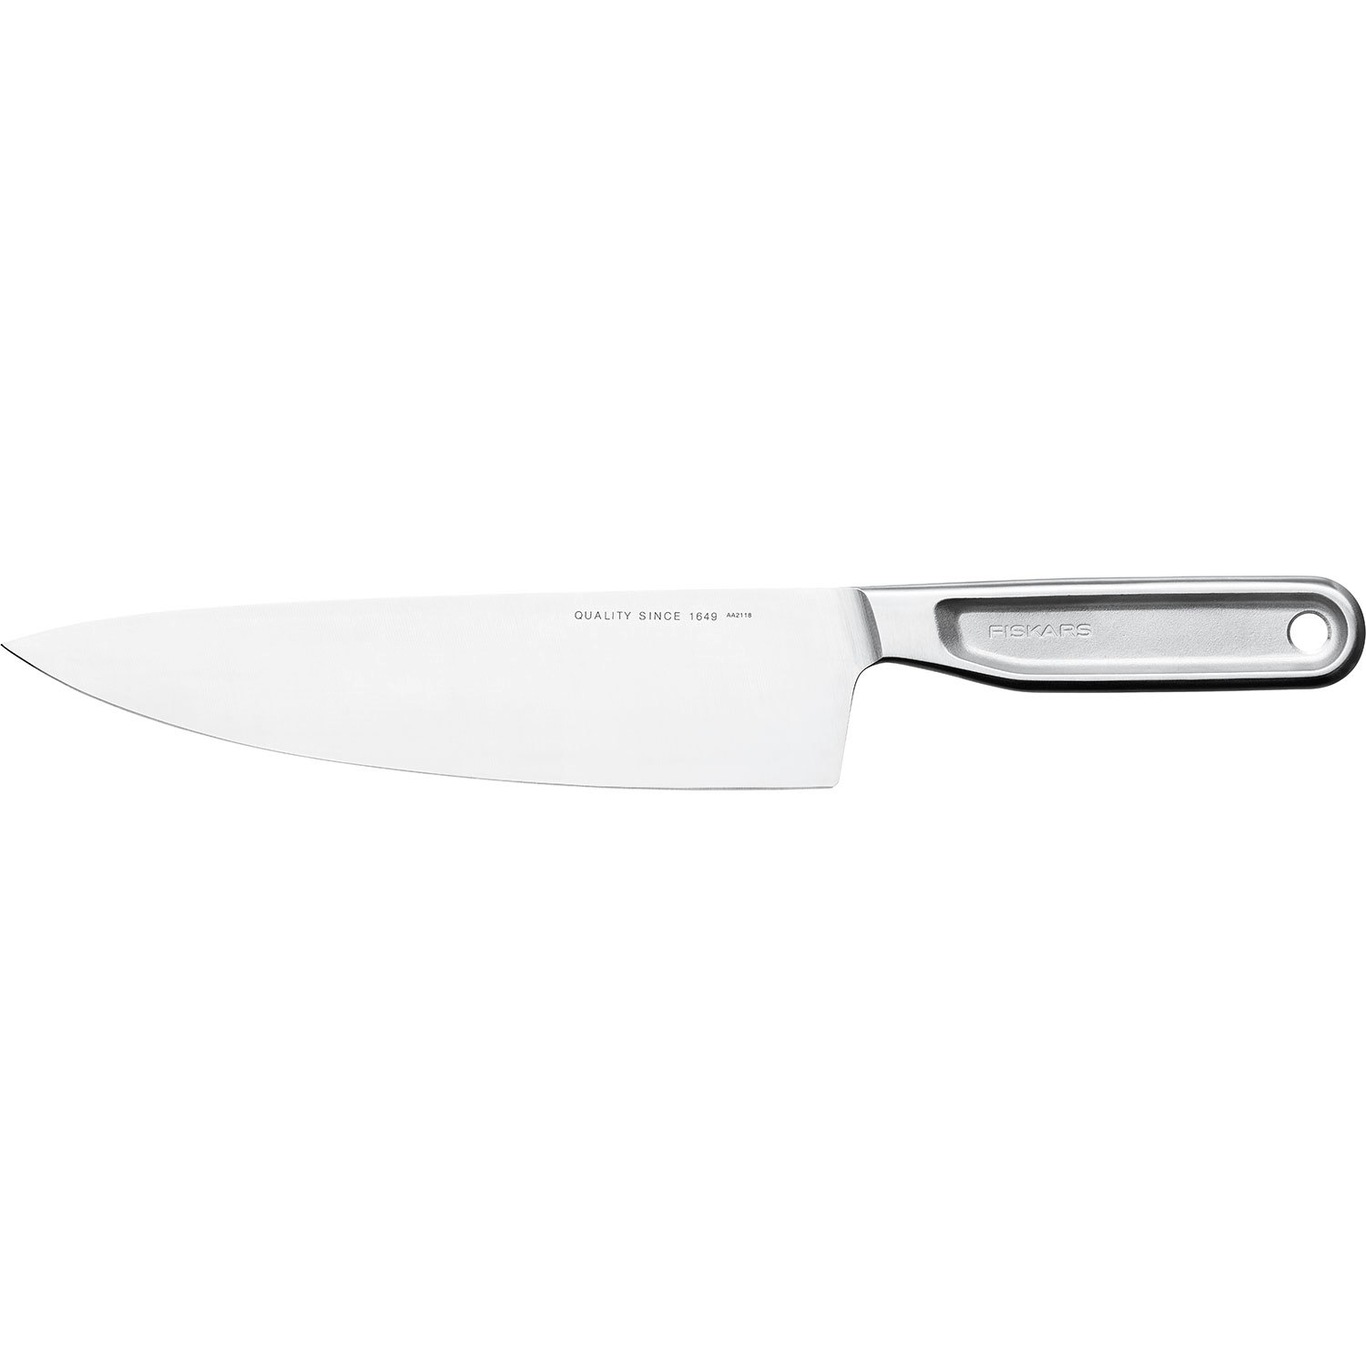 https://royaldesign.com/image/2/fiskars-all-steel-cook-knife-20-cm-0?w=800&quality=80